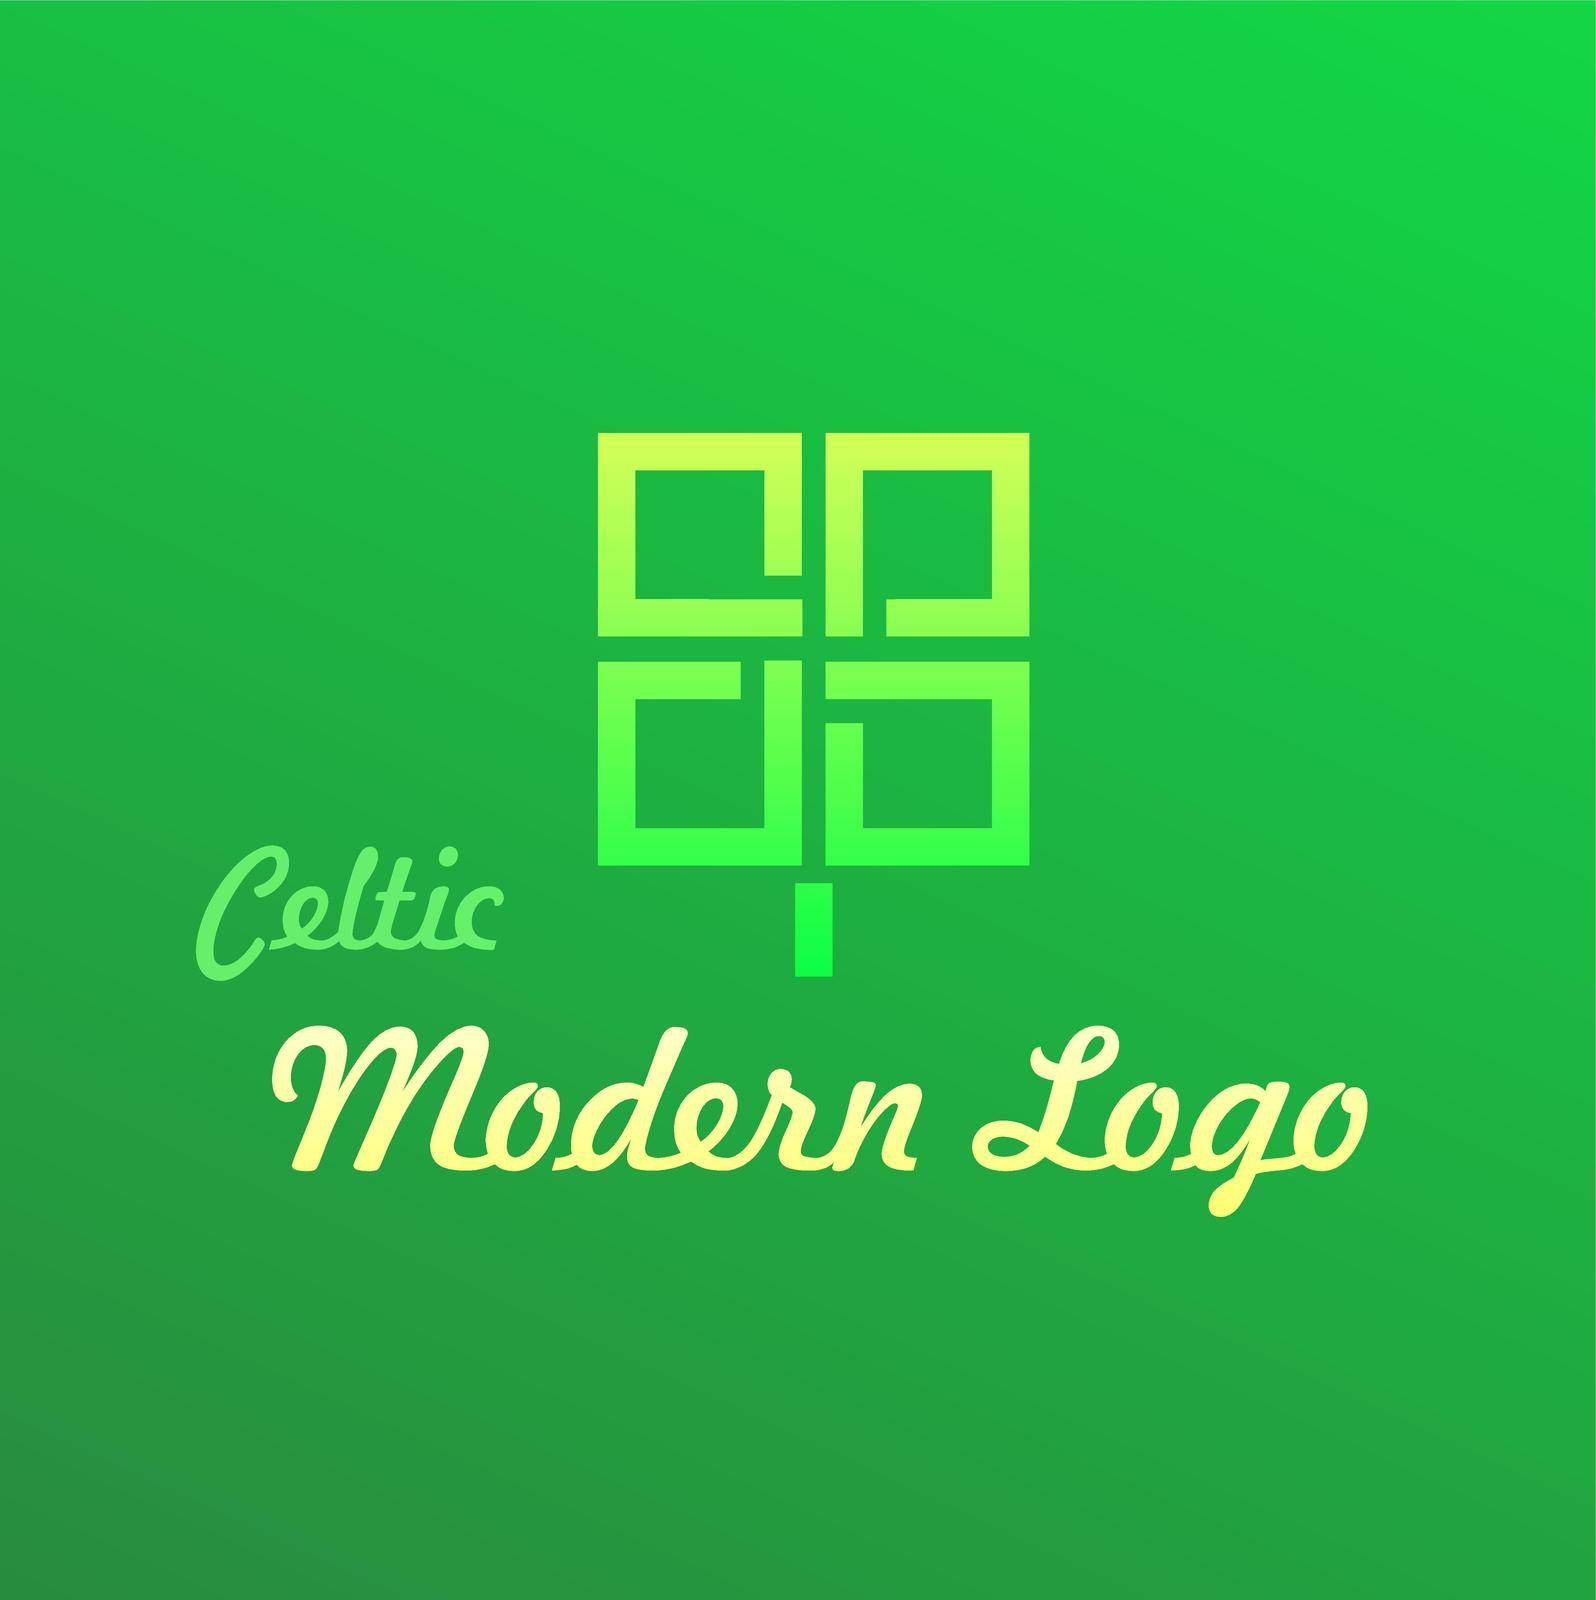 Irish Celtic Modern Logotype by macroarting